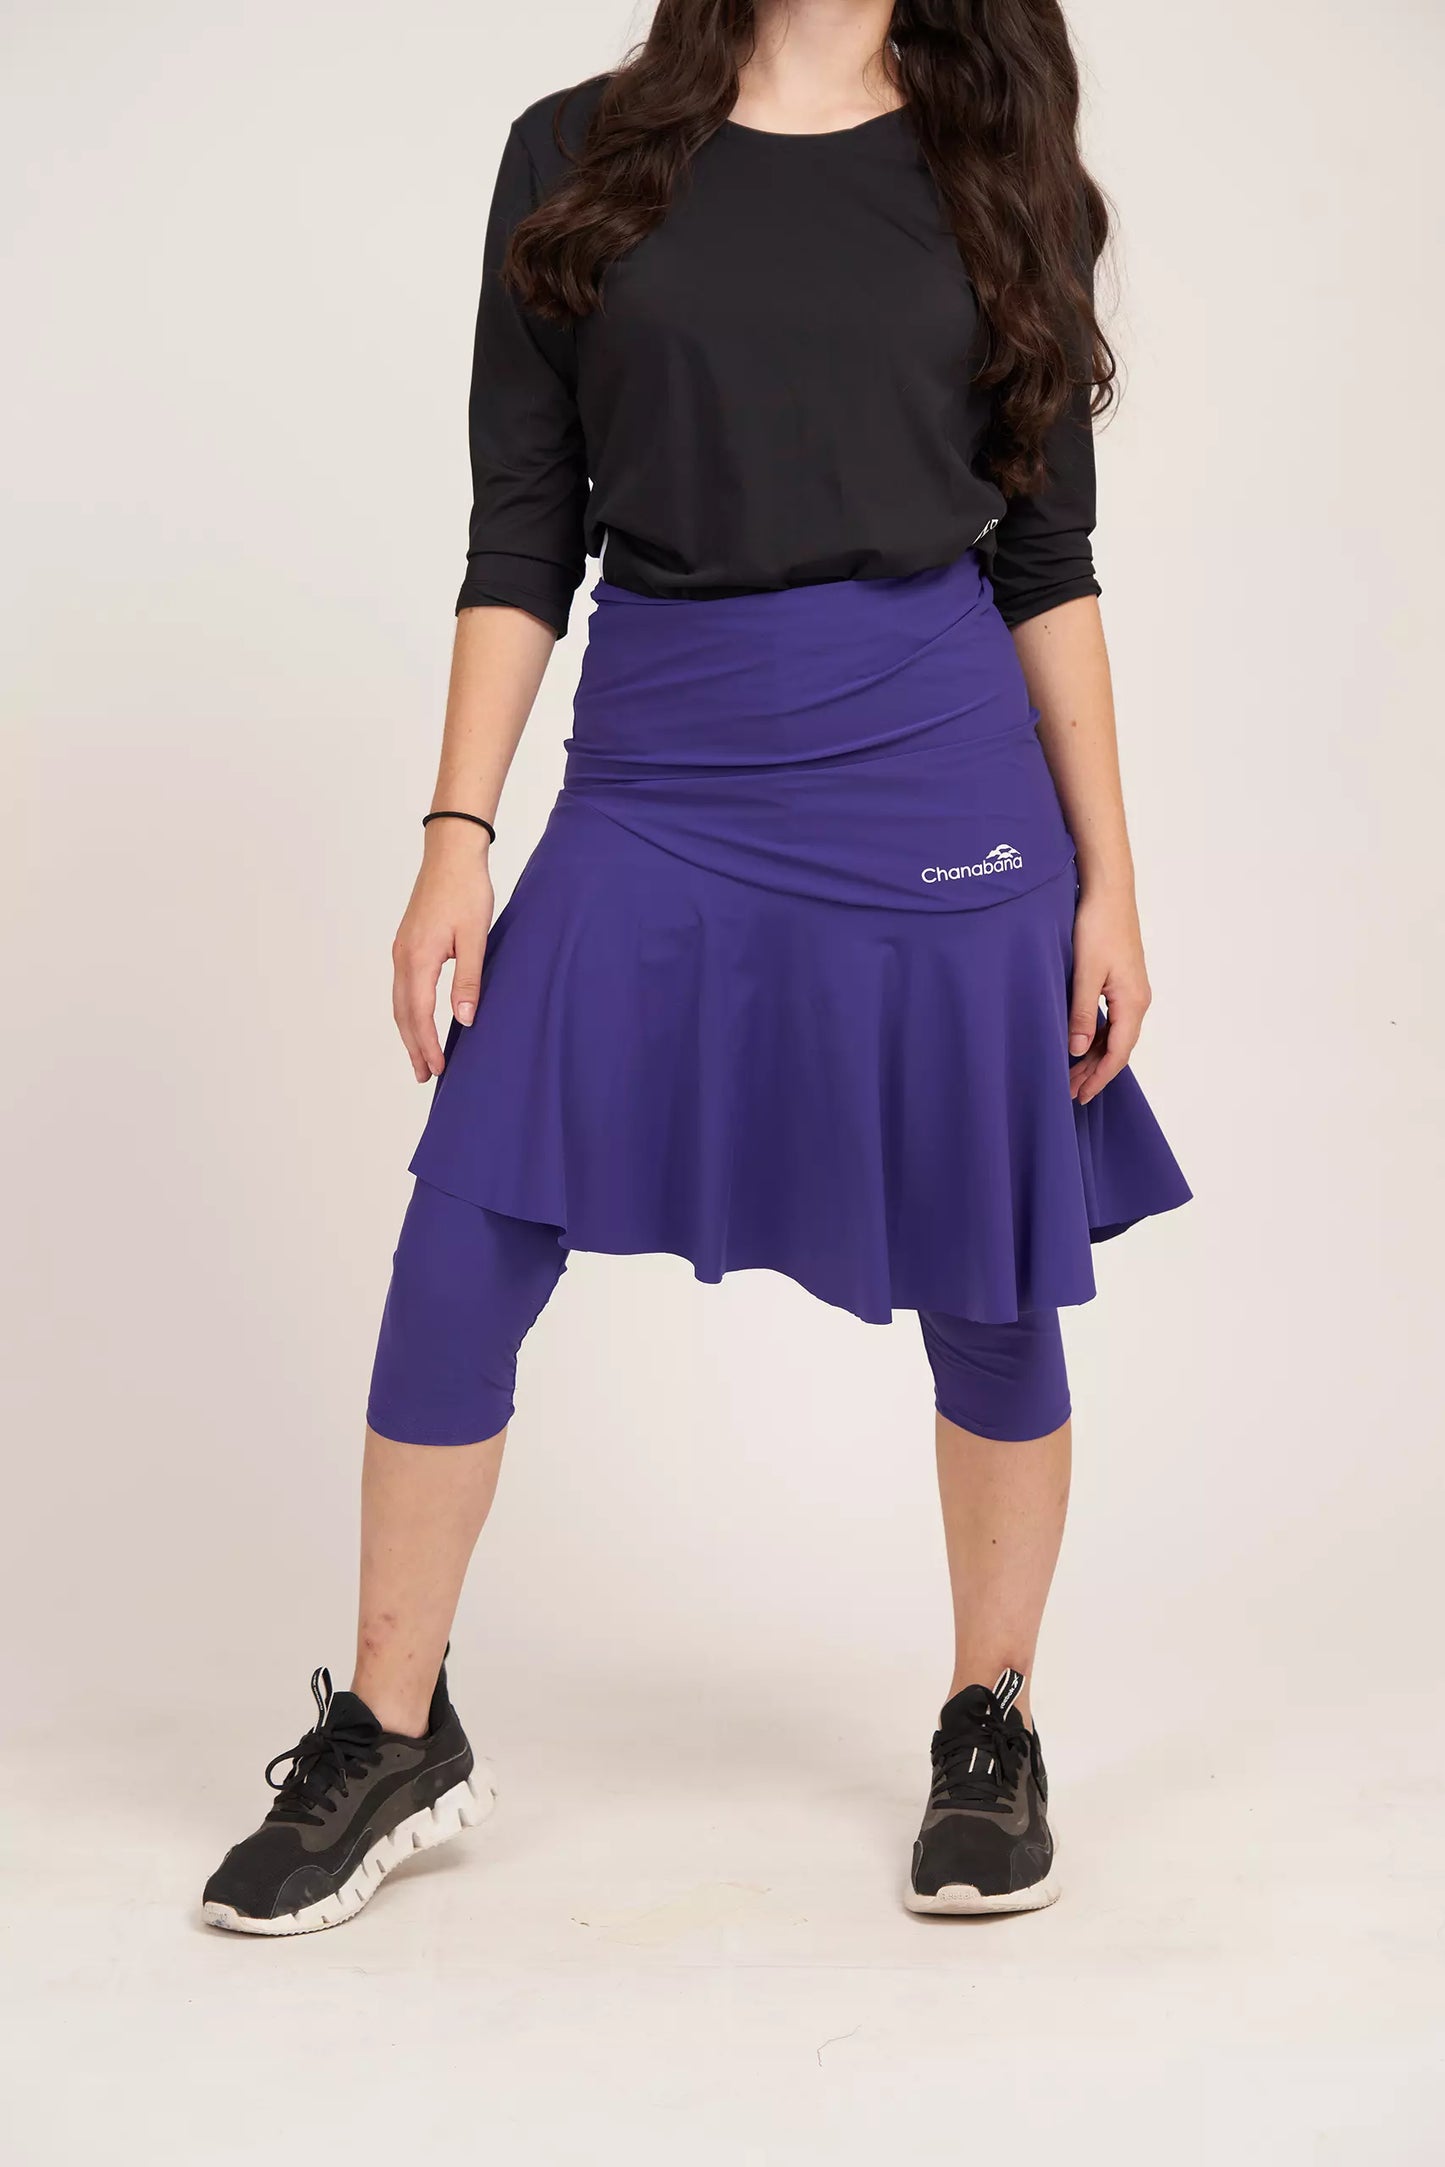 Tennis Flair Skirt - Purple